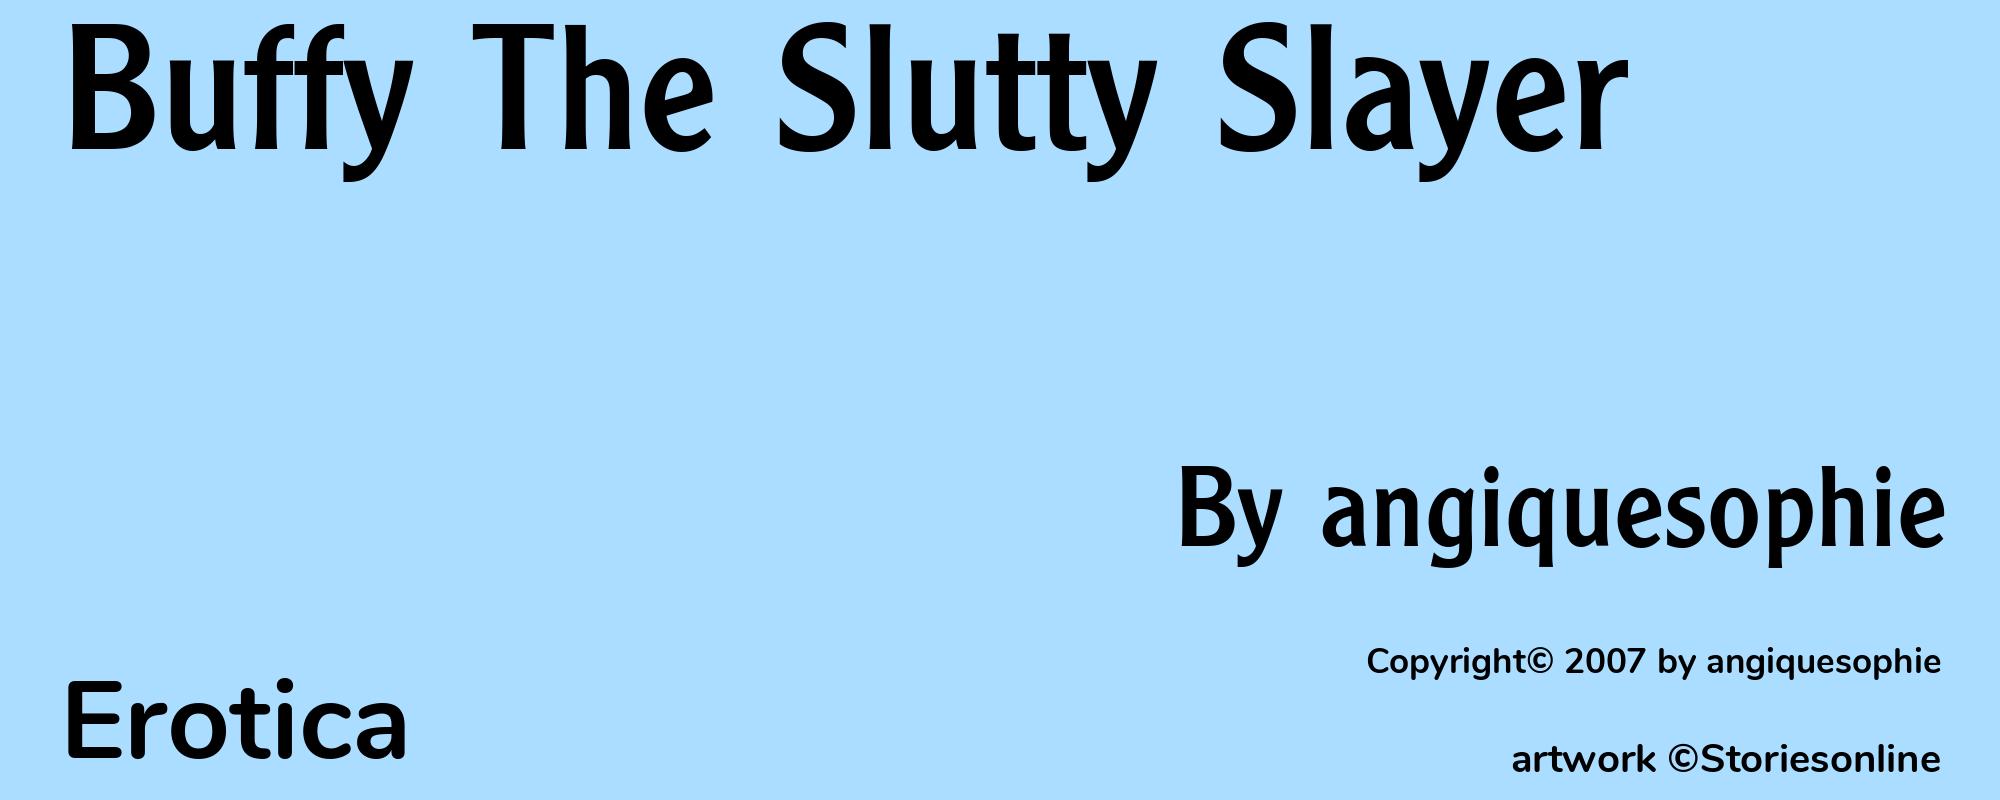 Buffy The Slutty Slayer - Cover